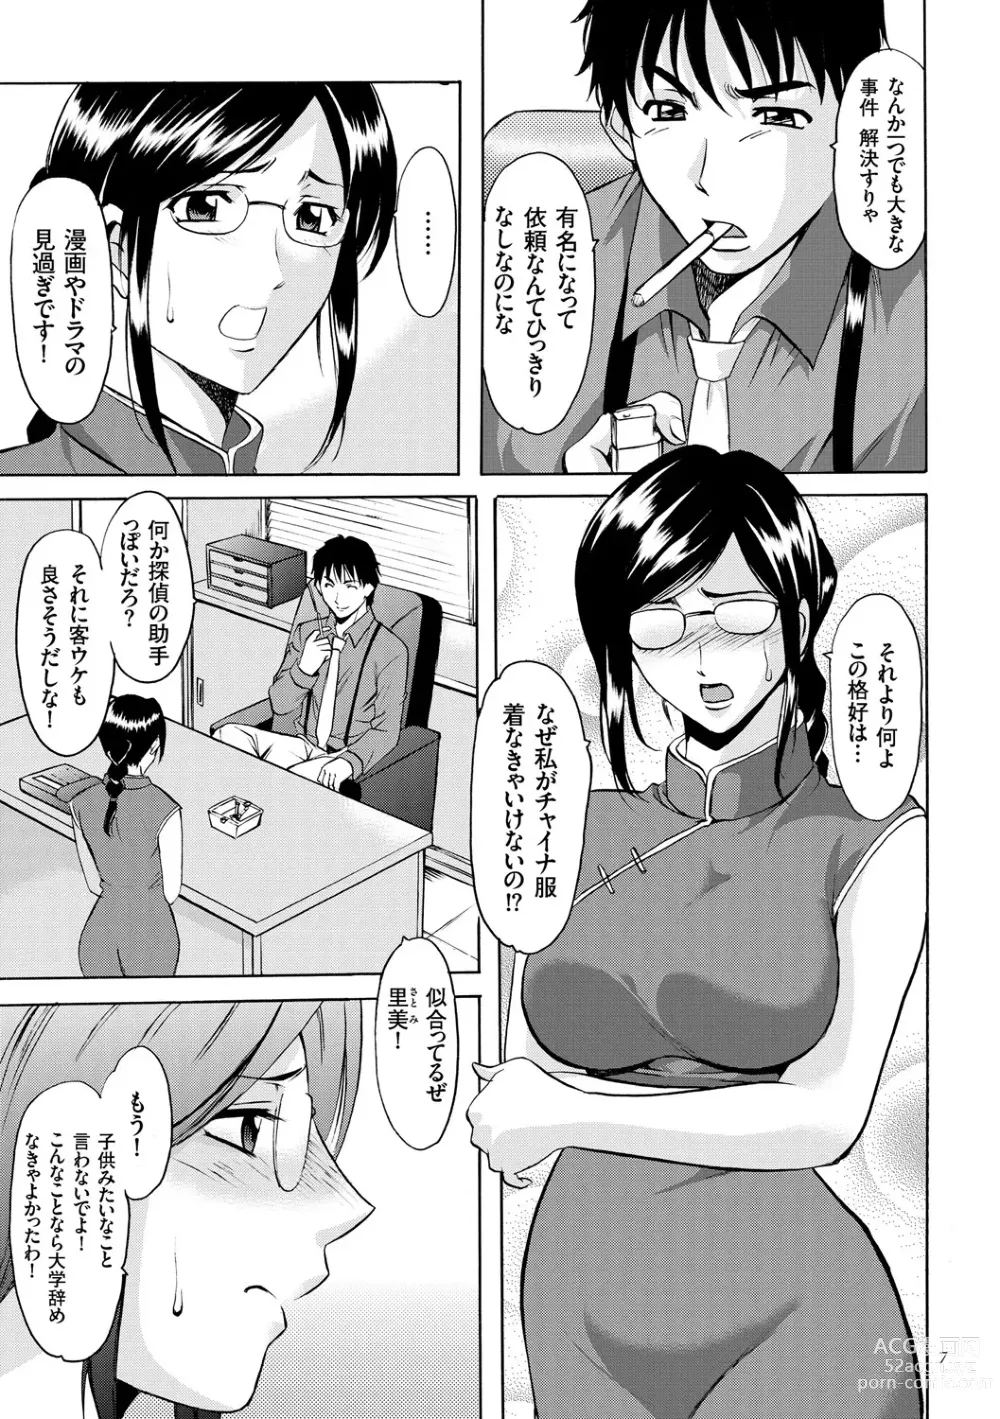 Page 7 of manga Sennyu Tsuma Satomi Kiroku